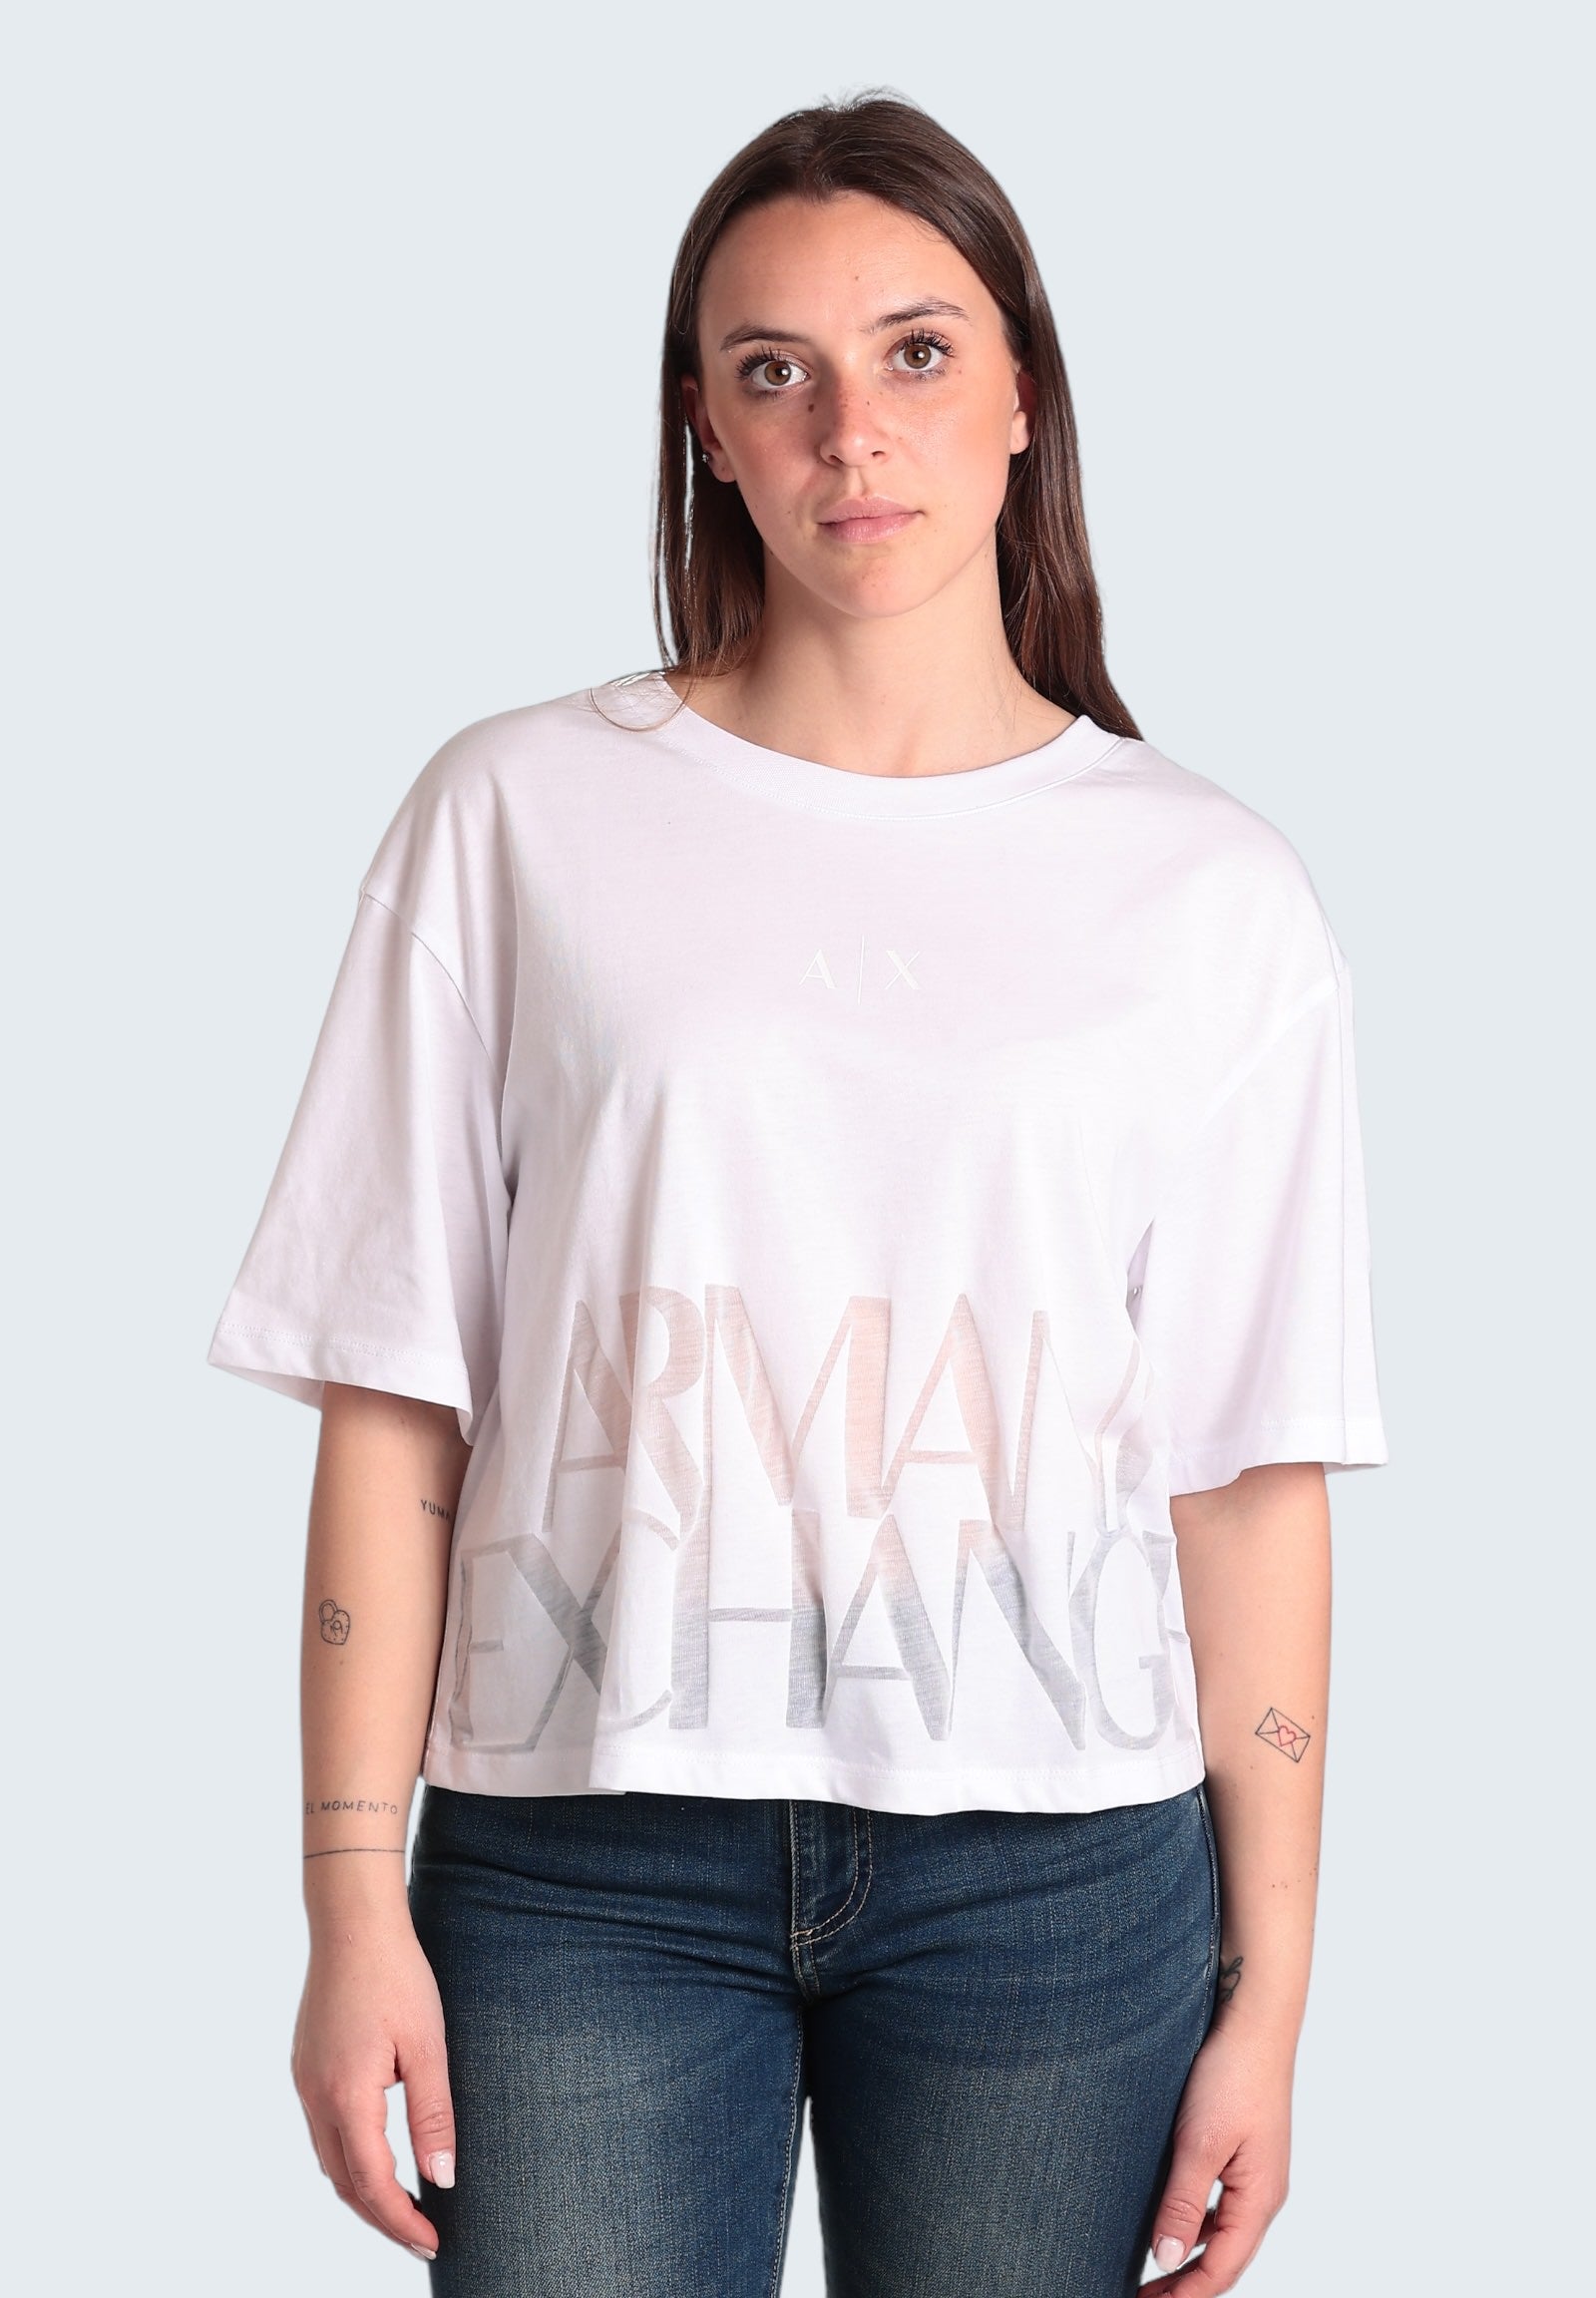 T-Shirt 3dyt33 Optic White